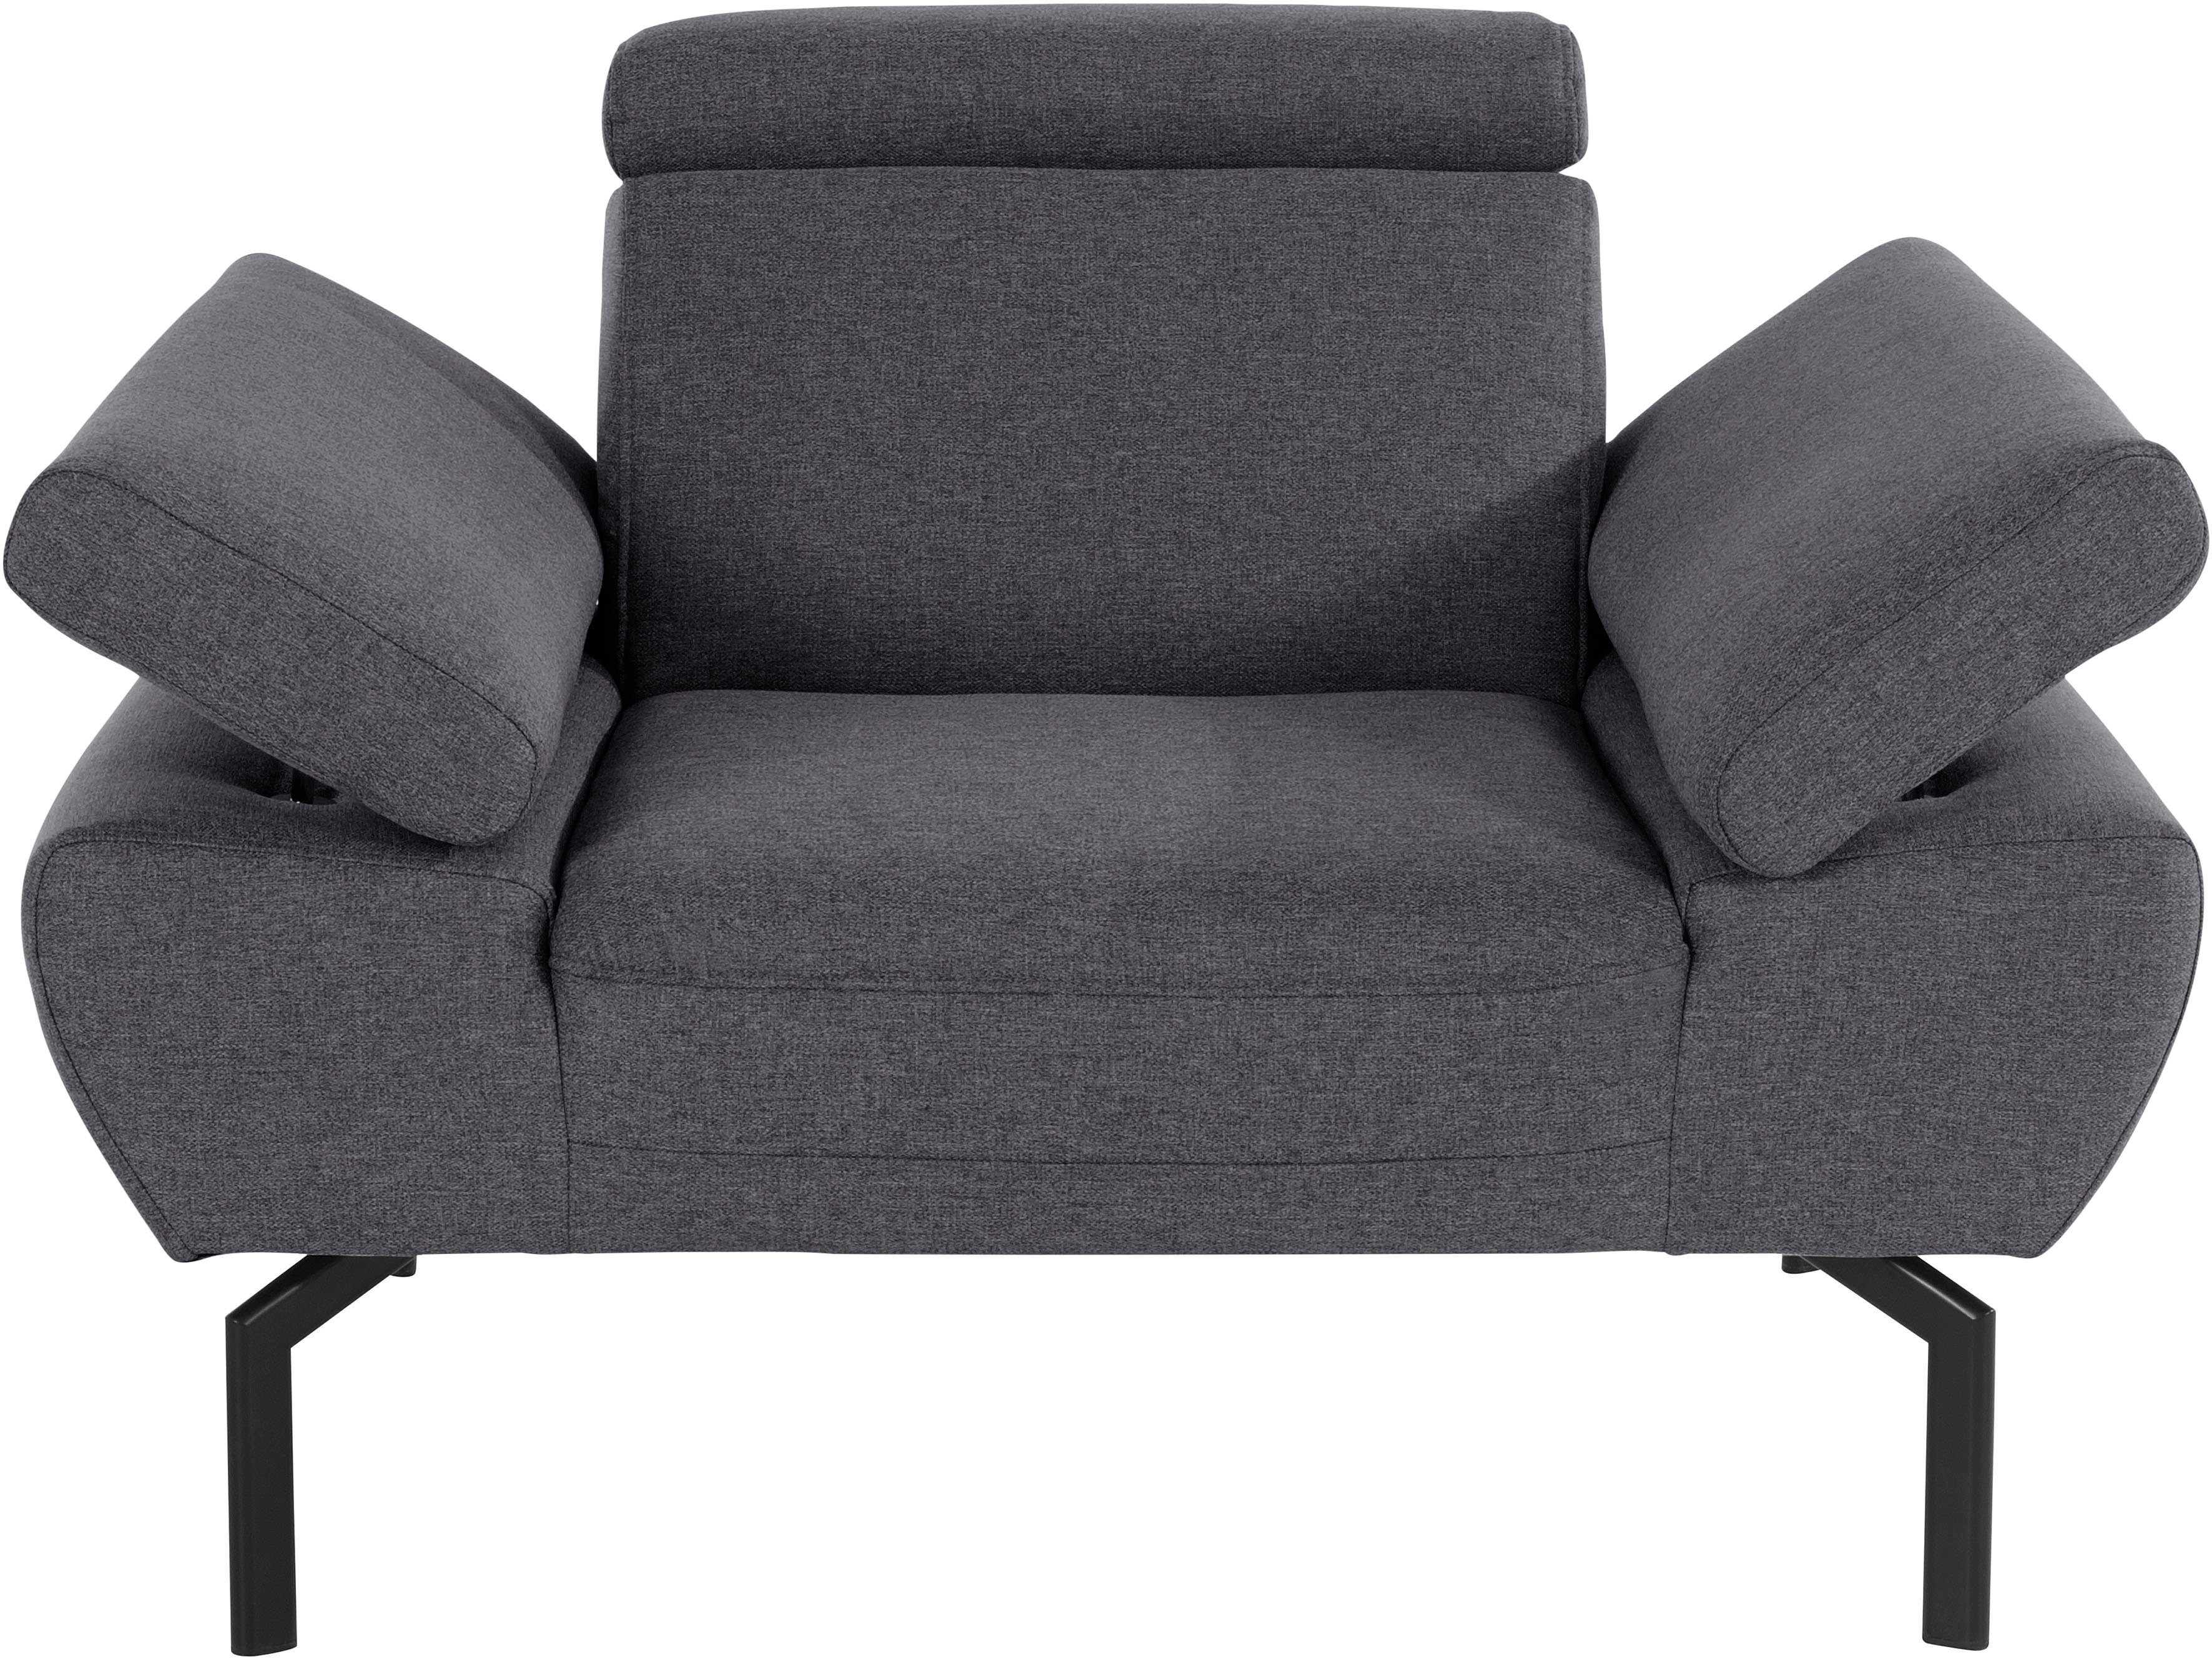 Places of Style Sessel Luxus-Microfaser Rückenverstellung, in Trapino Luxus, Lederoptik wahlweise mit